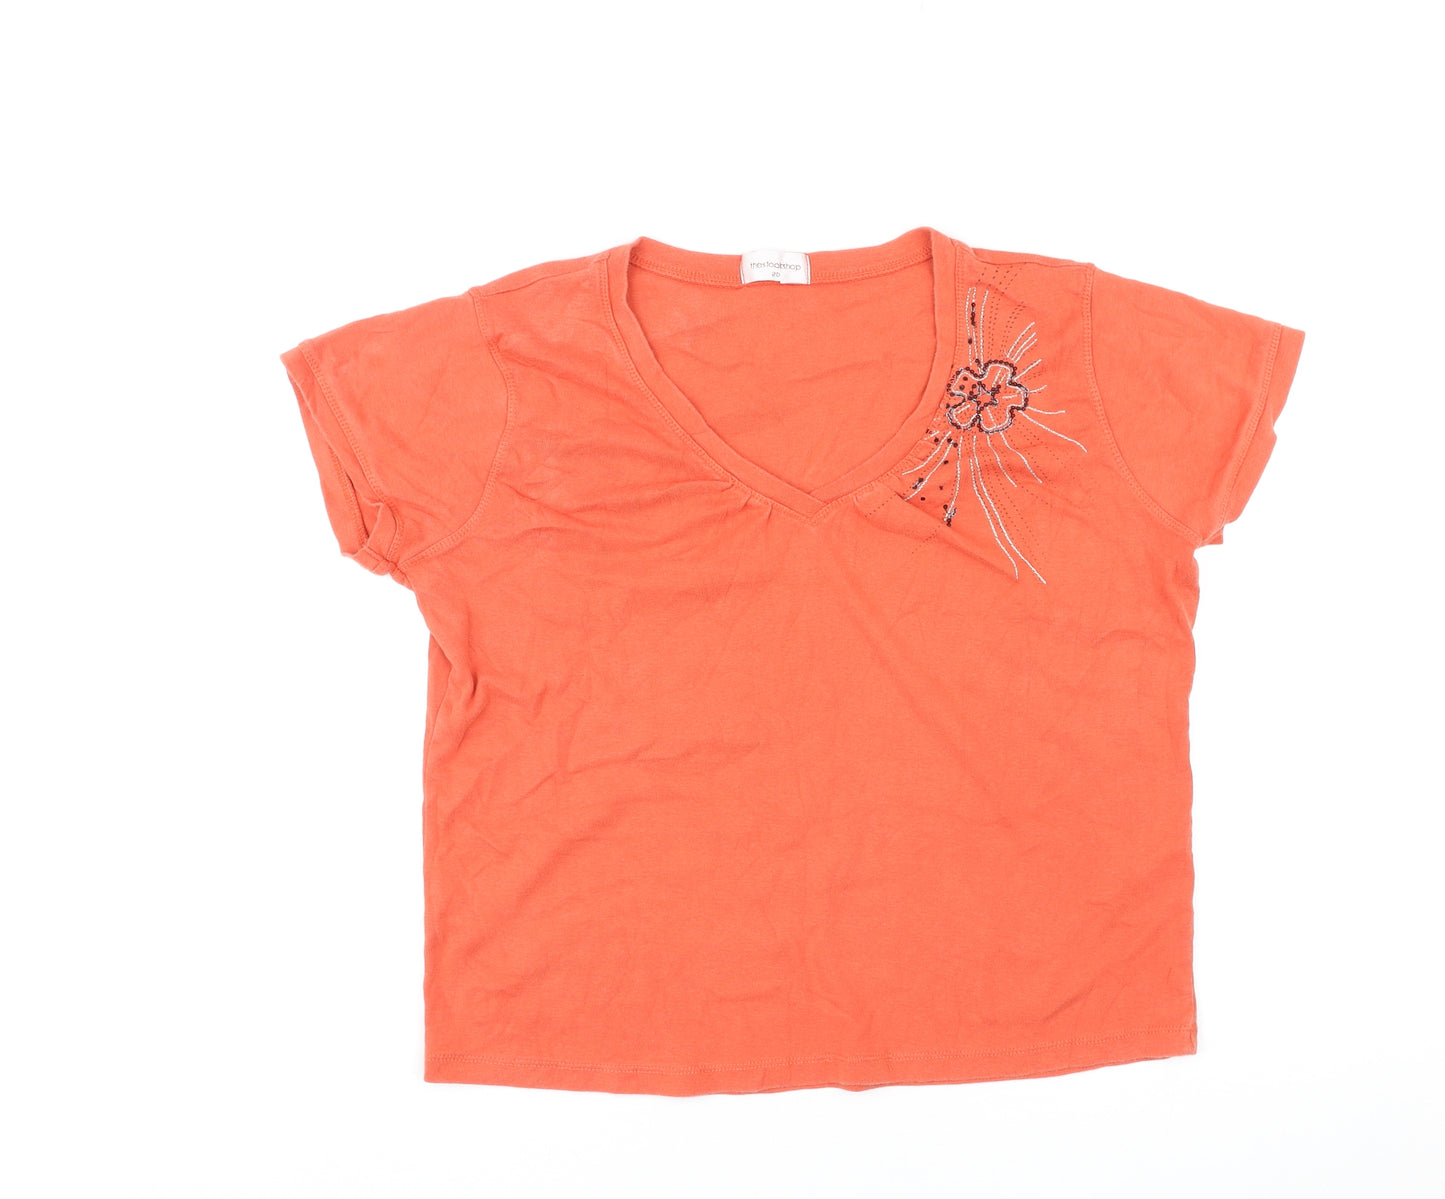 The Stock Shop Womens Orange Cotton Basic T-Shirt Size 20 V-Neck - Floral Detail